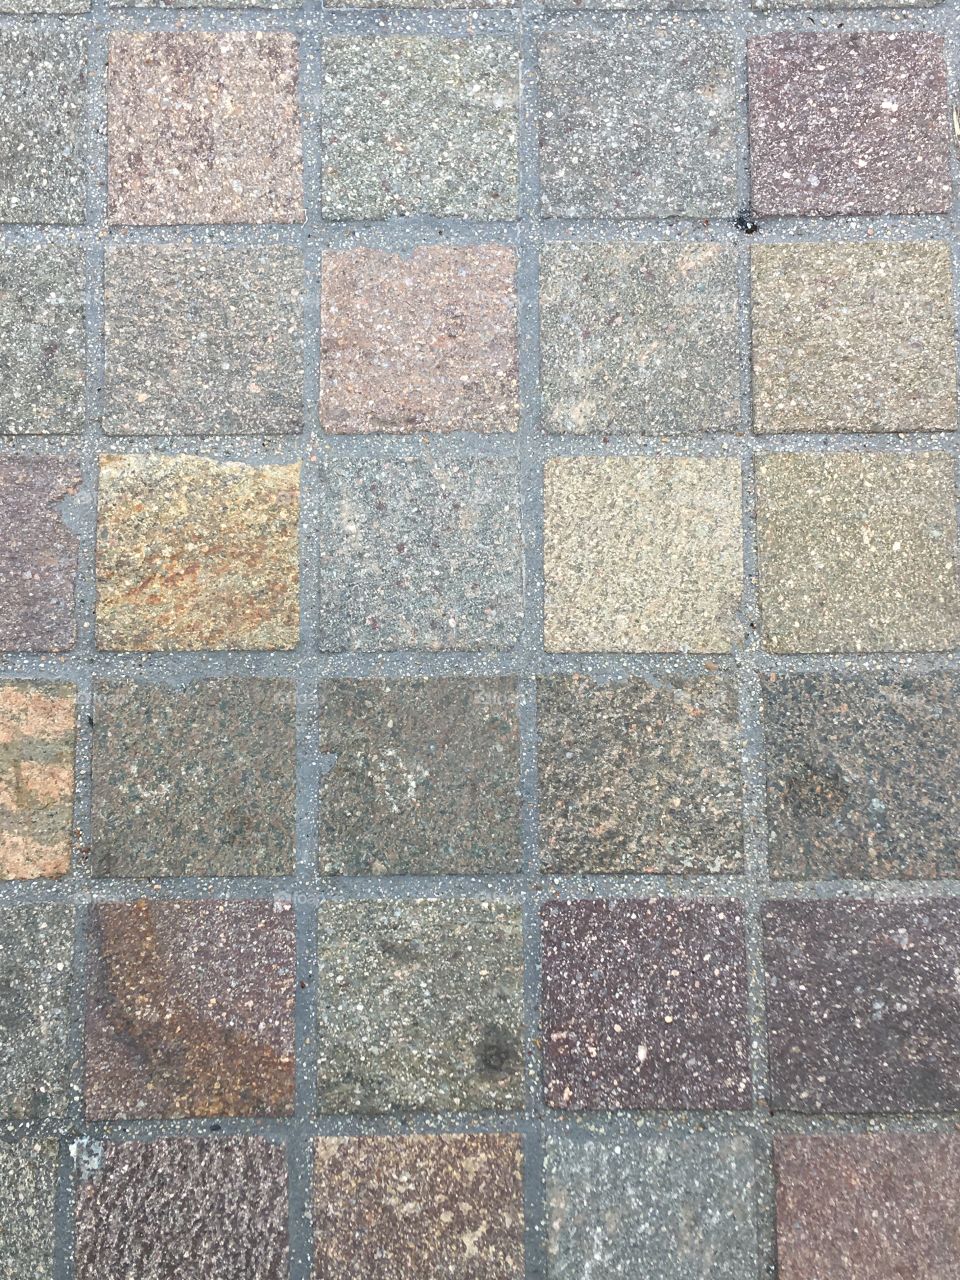 Tiles on floor texture